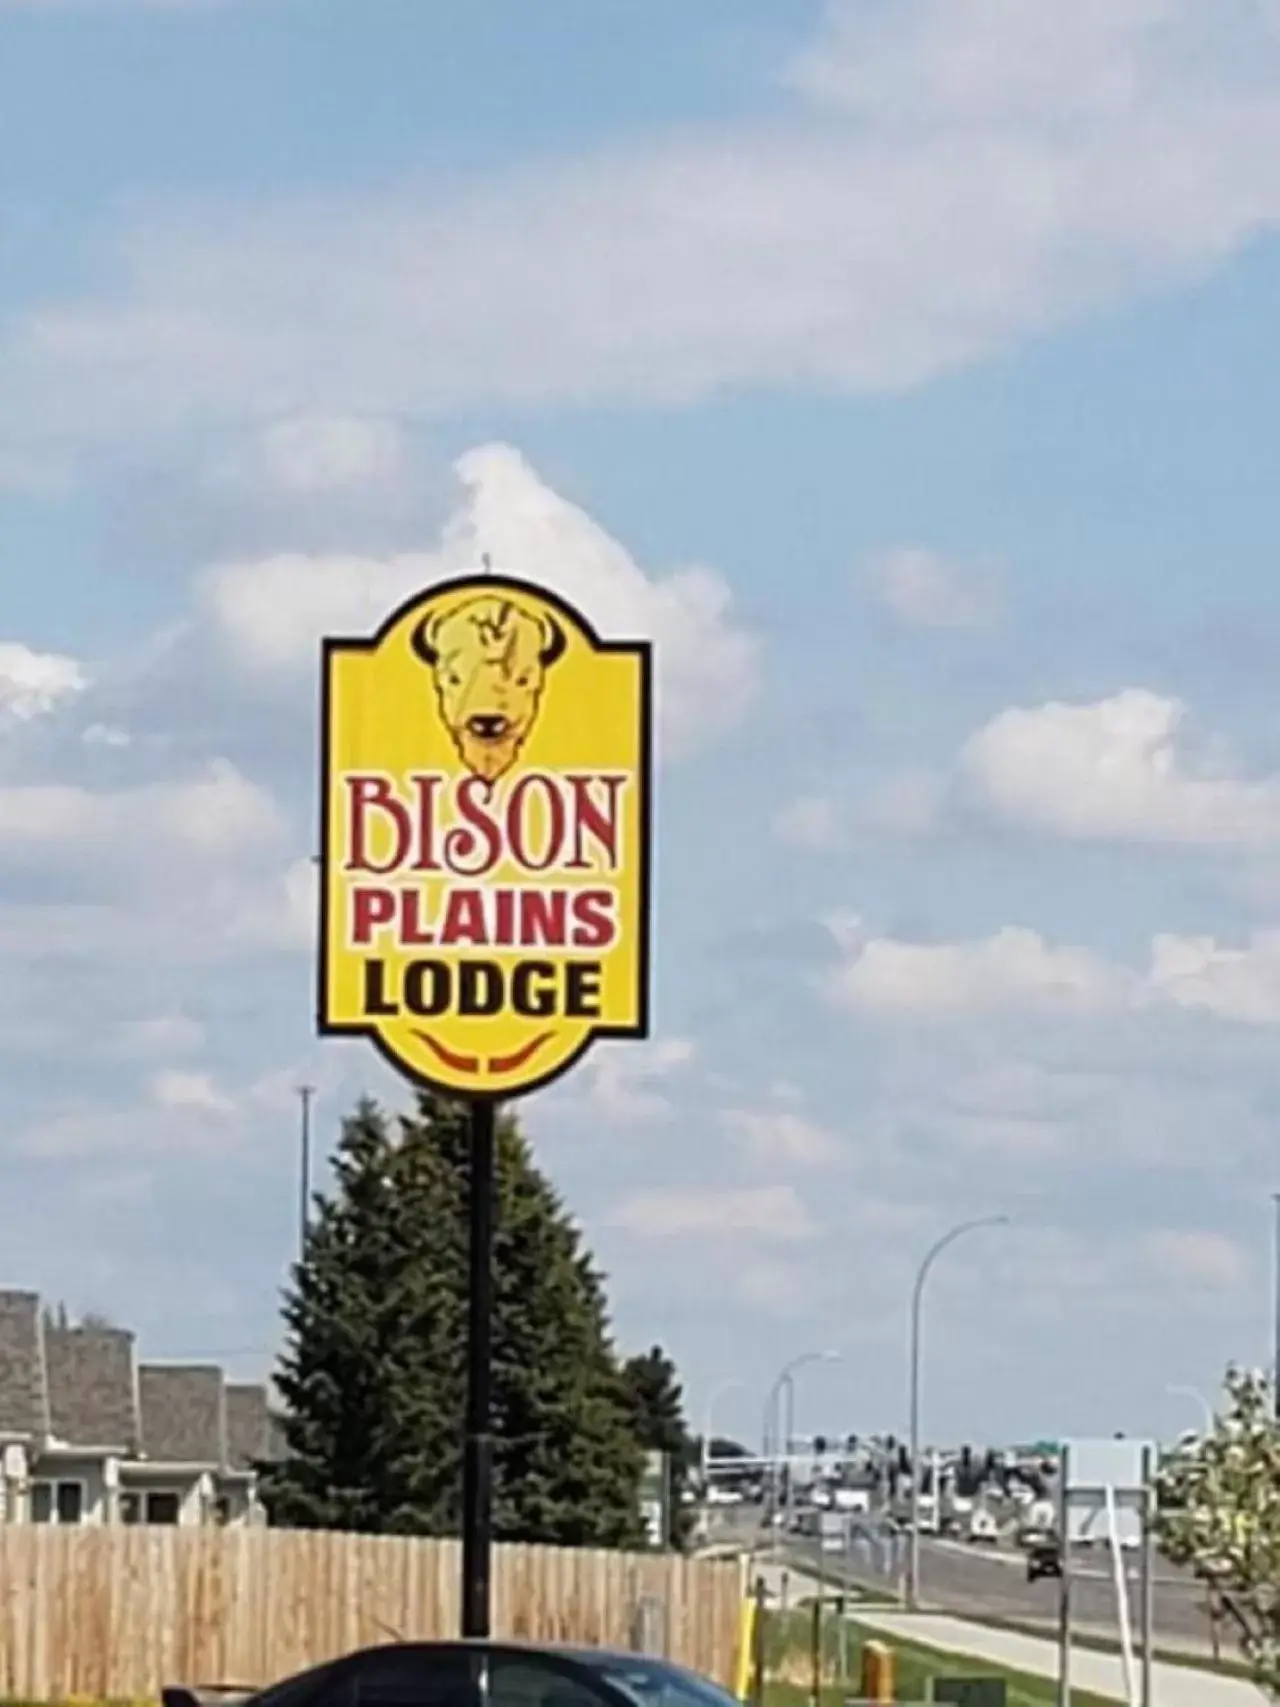 Property logo or sign in Bison Plains Lodge